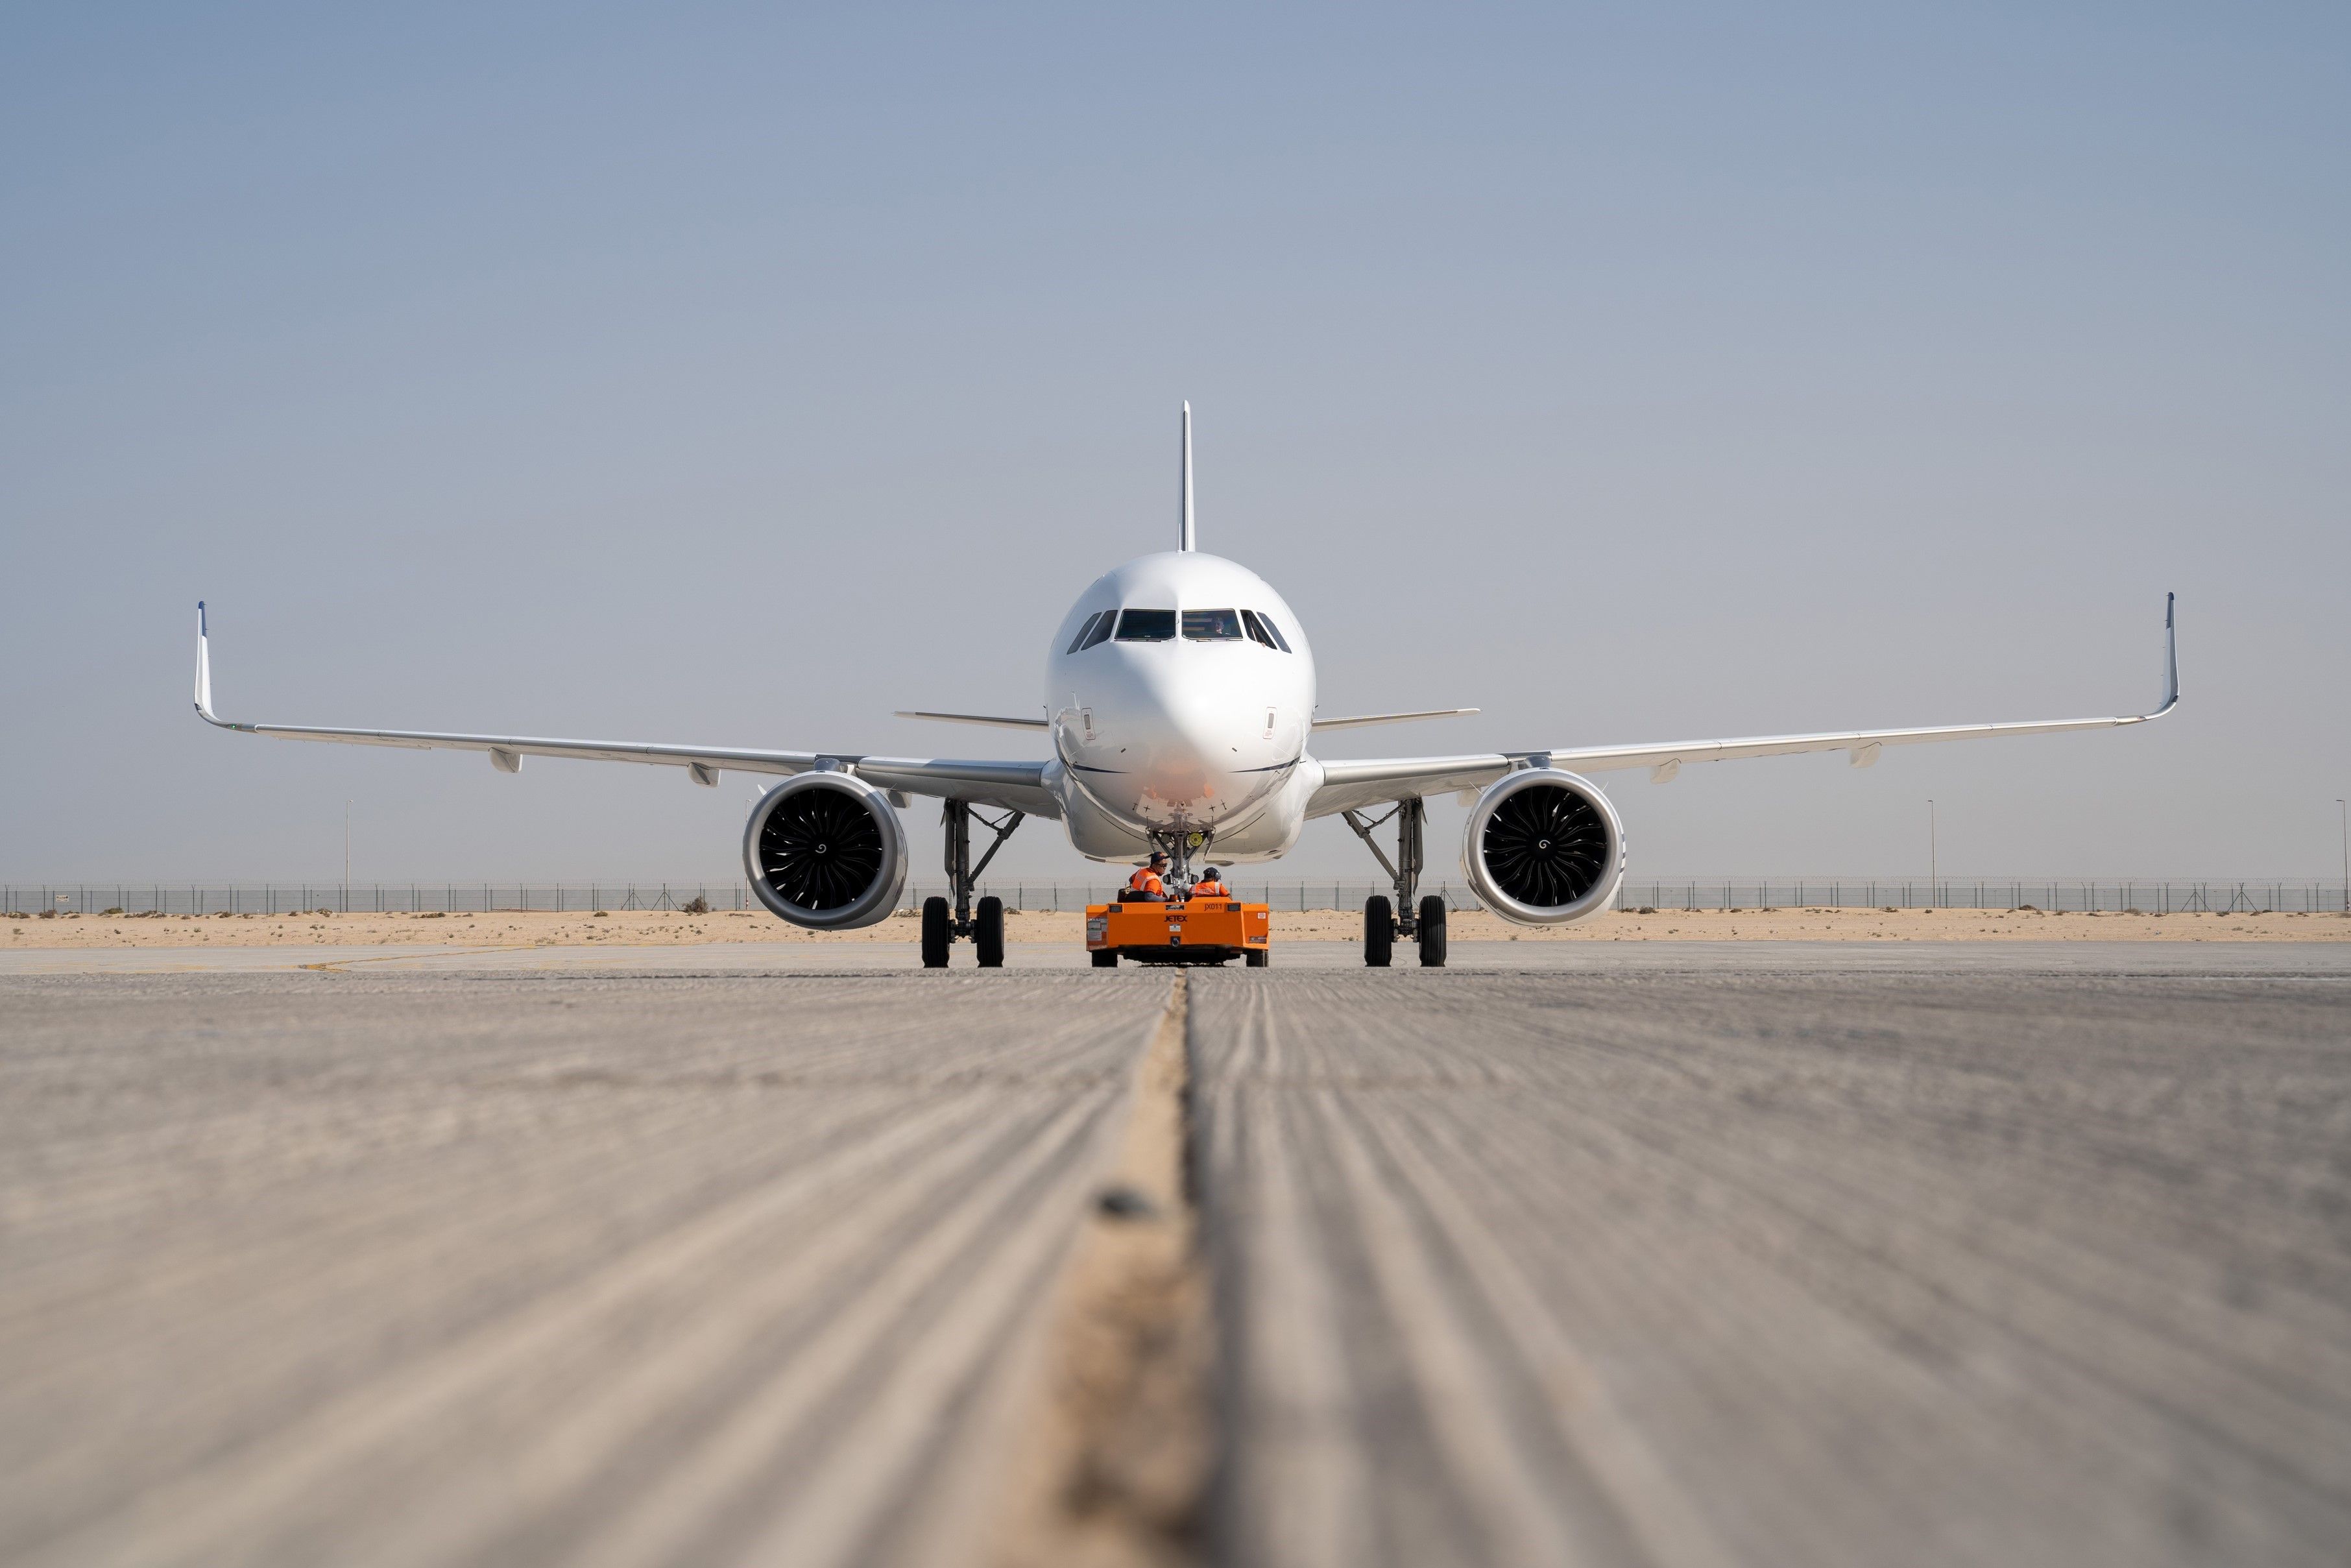 Arrival of Acropolis Aviation ACJ320neo   Dubai Airshow 2021